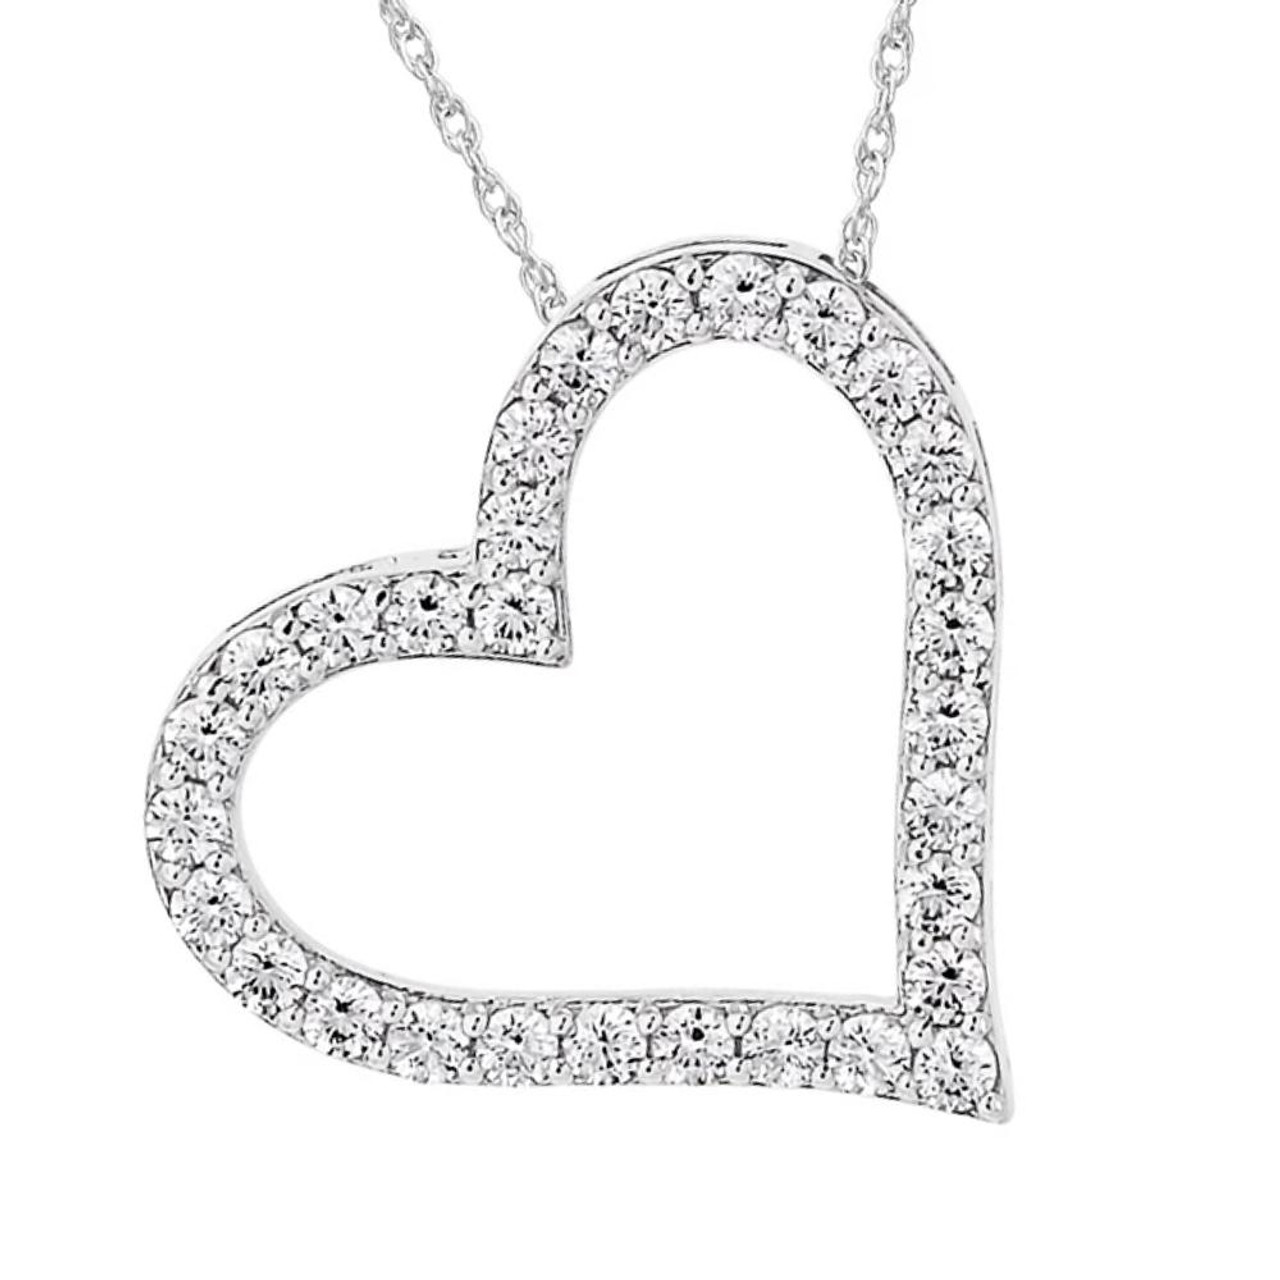 Diamond Heart Pendant in 14k White Gold (1/6 ct. tw.)